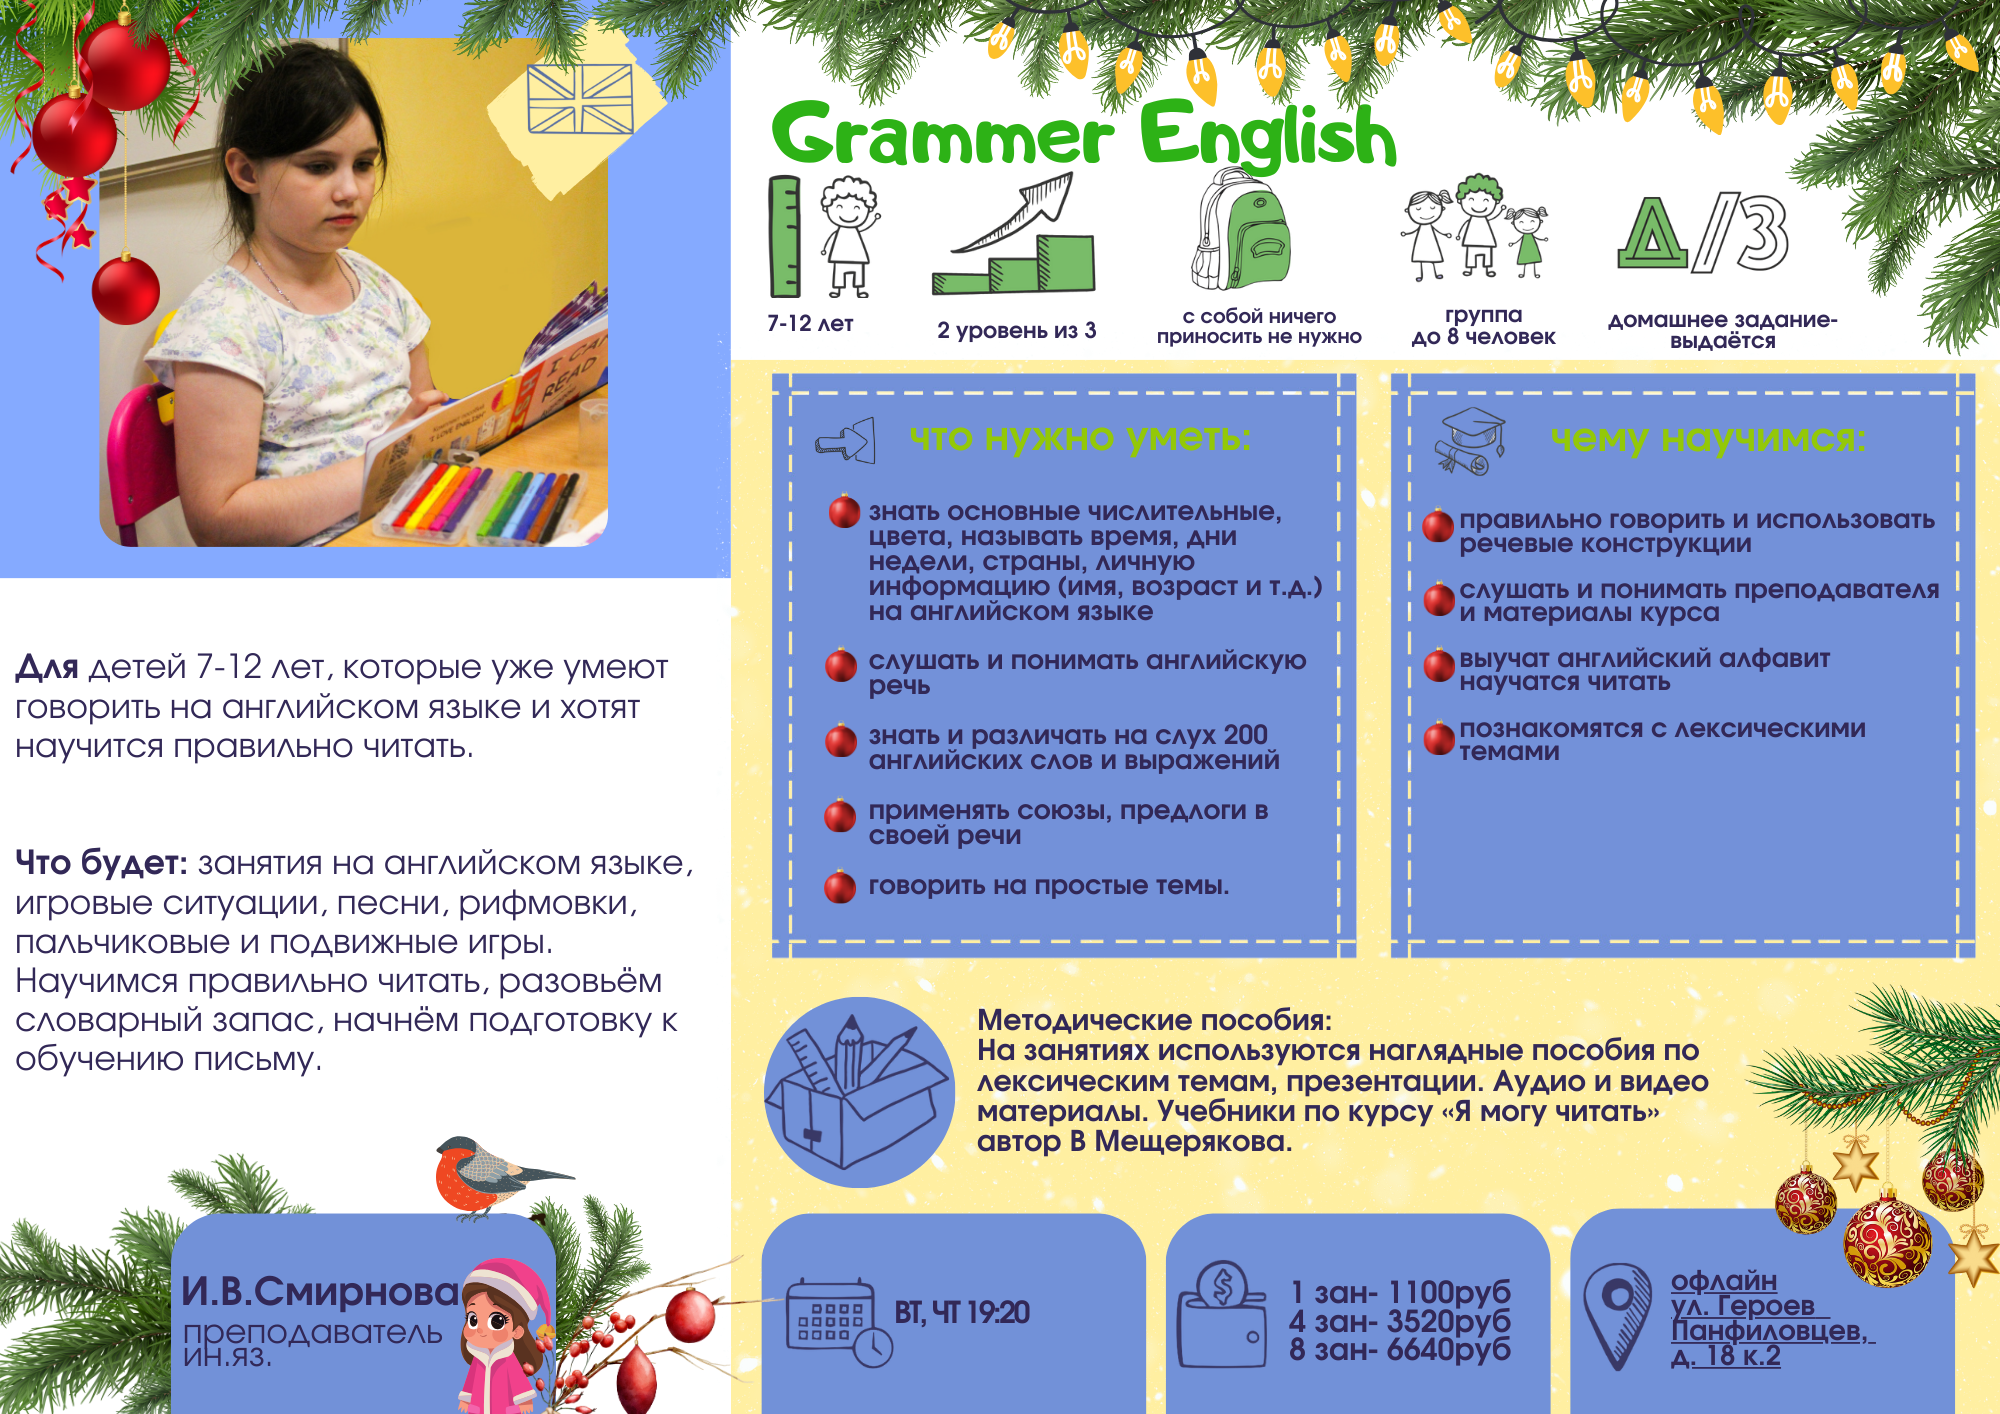 Grammer English